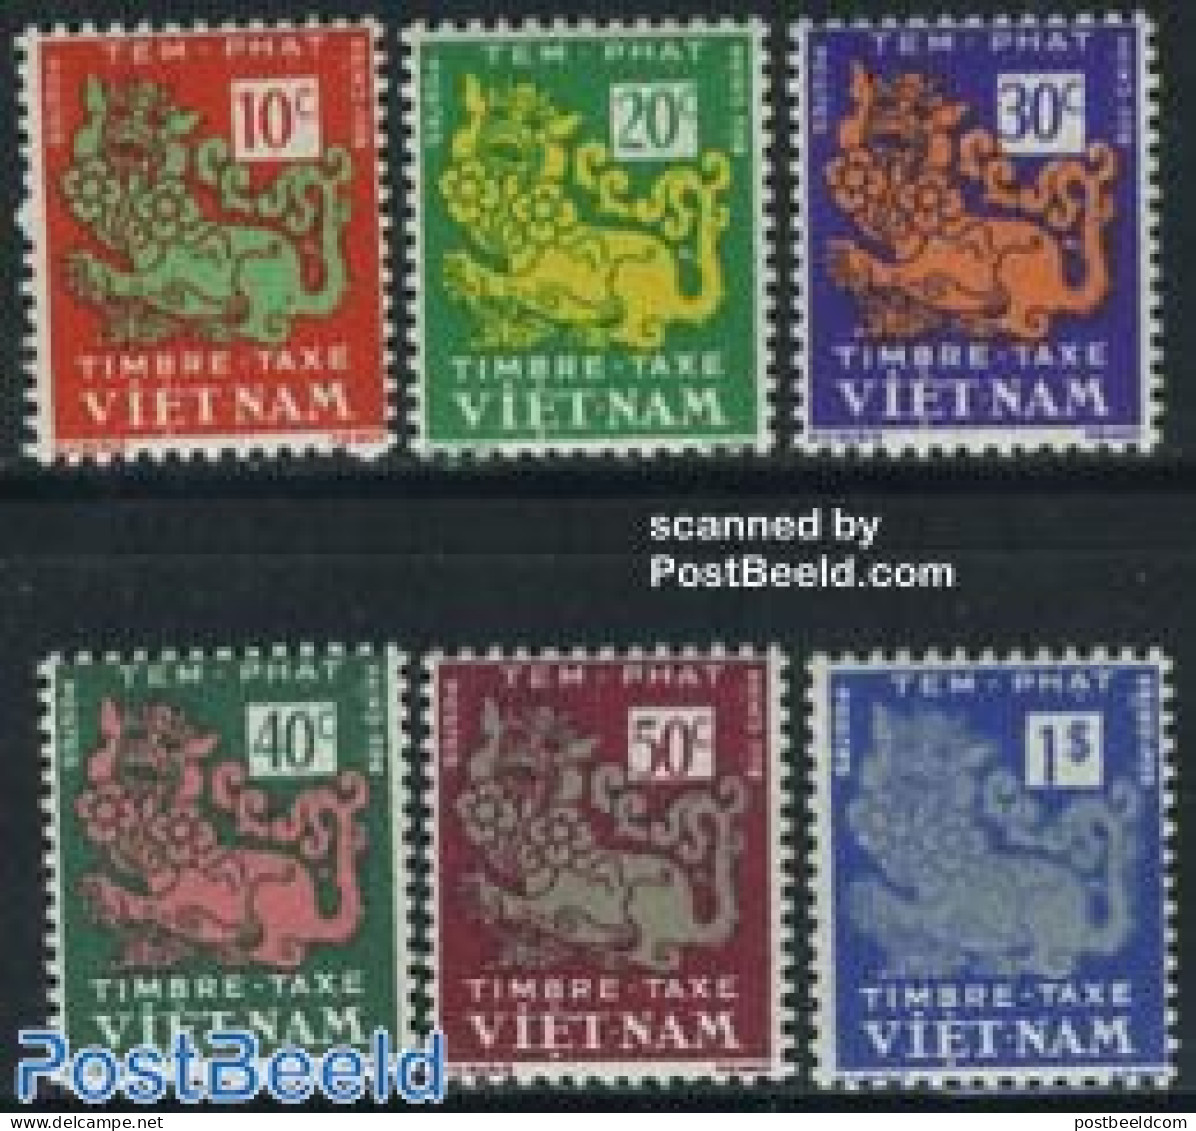 Vietnam, South 1952 Postage Due, Dragons 6v, Mint NH, Art - Fairytales - Fiabe, Racconti Popolari & Leggende